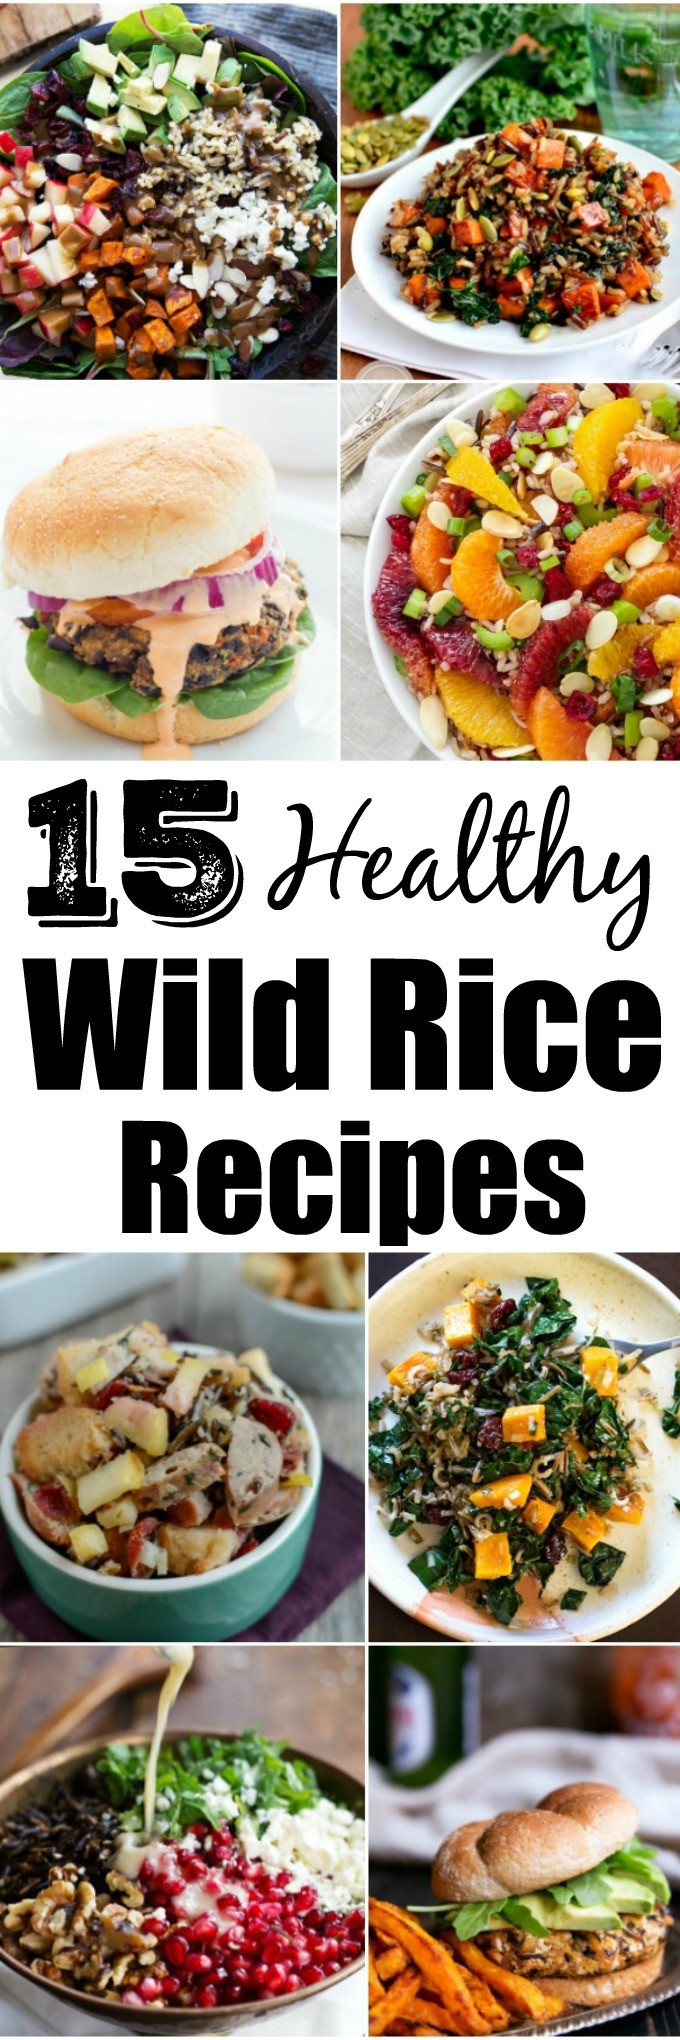 Wild Rice Healthy
 15 Healthy Wild Rice Recipes